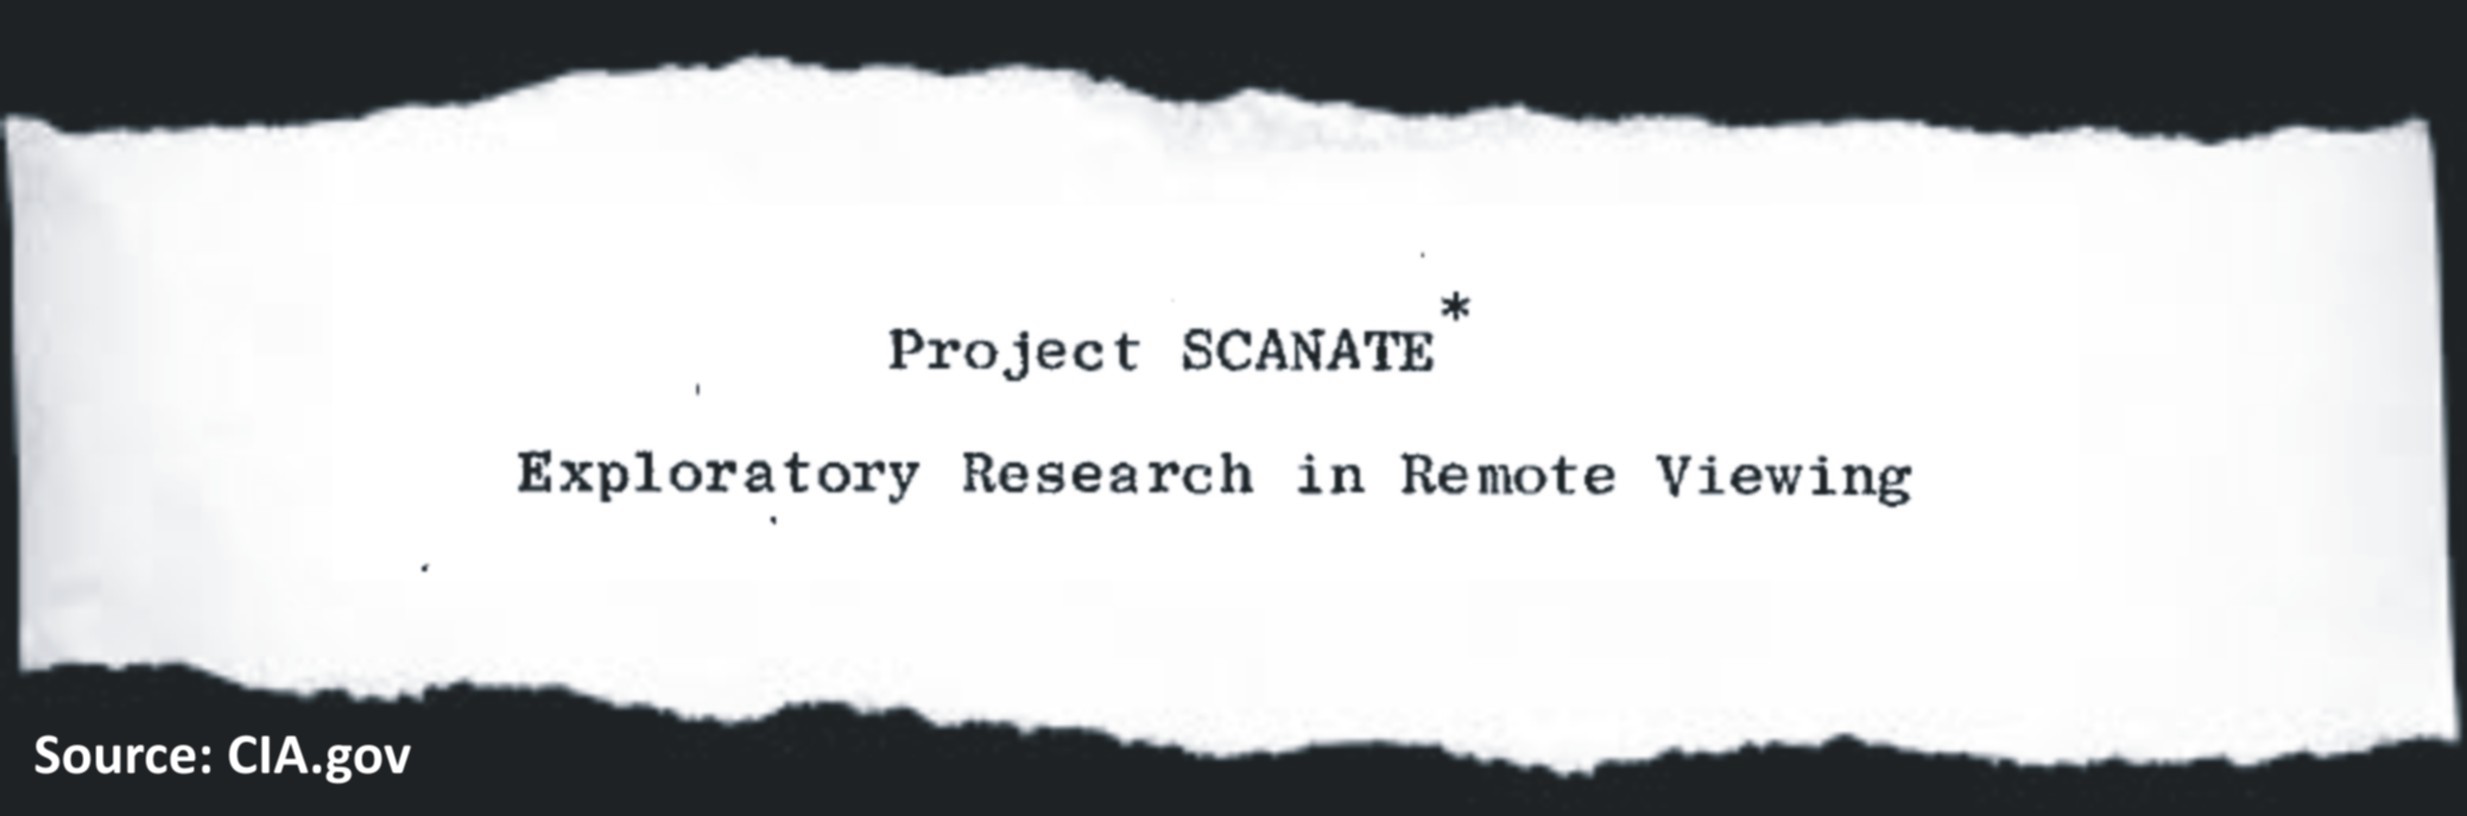 Project Scannate